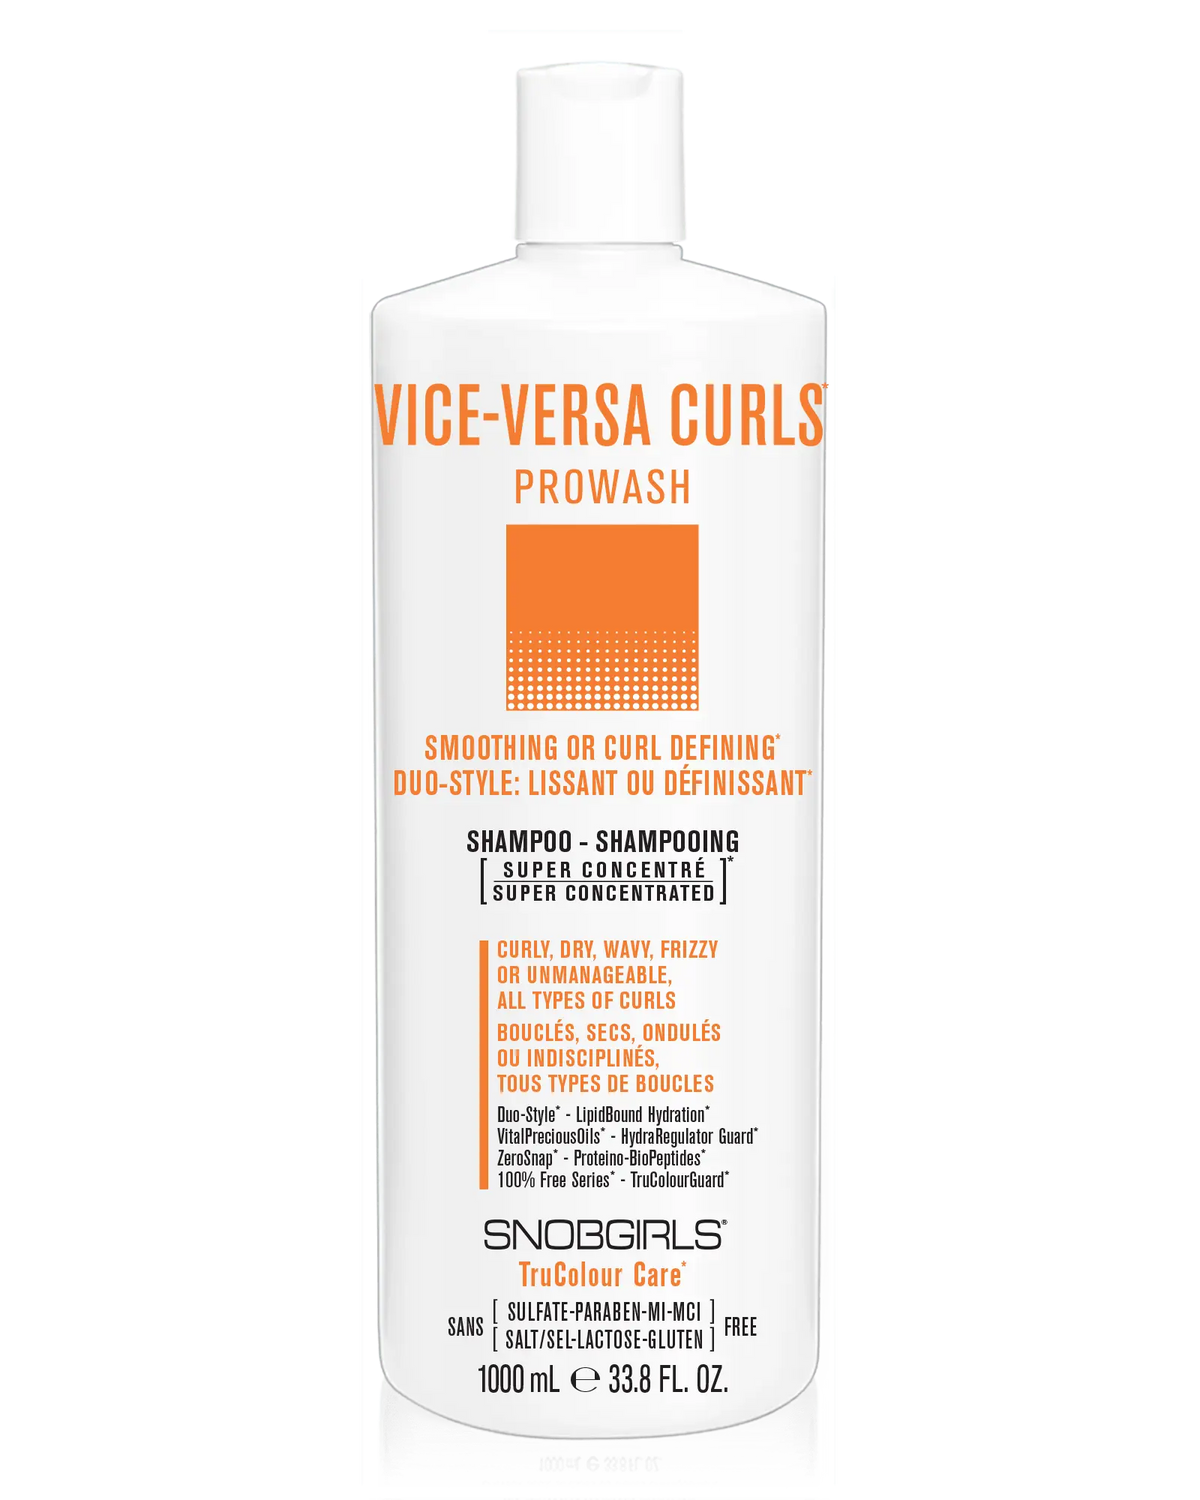 VICE-VERSA CURLS Prowash (shampoo) 1000 mL - SNOBGIRLS Canada